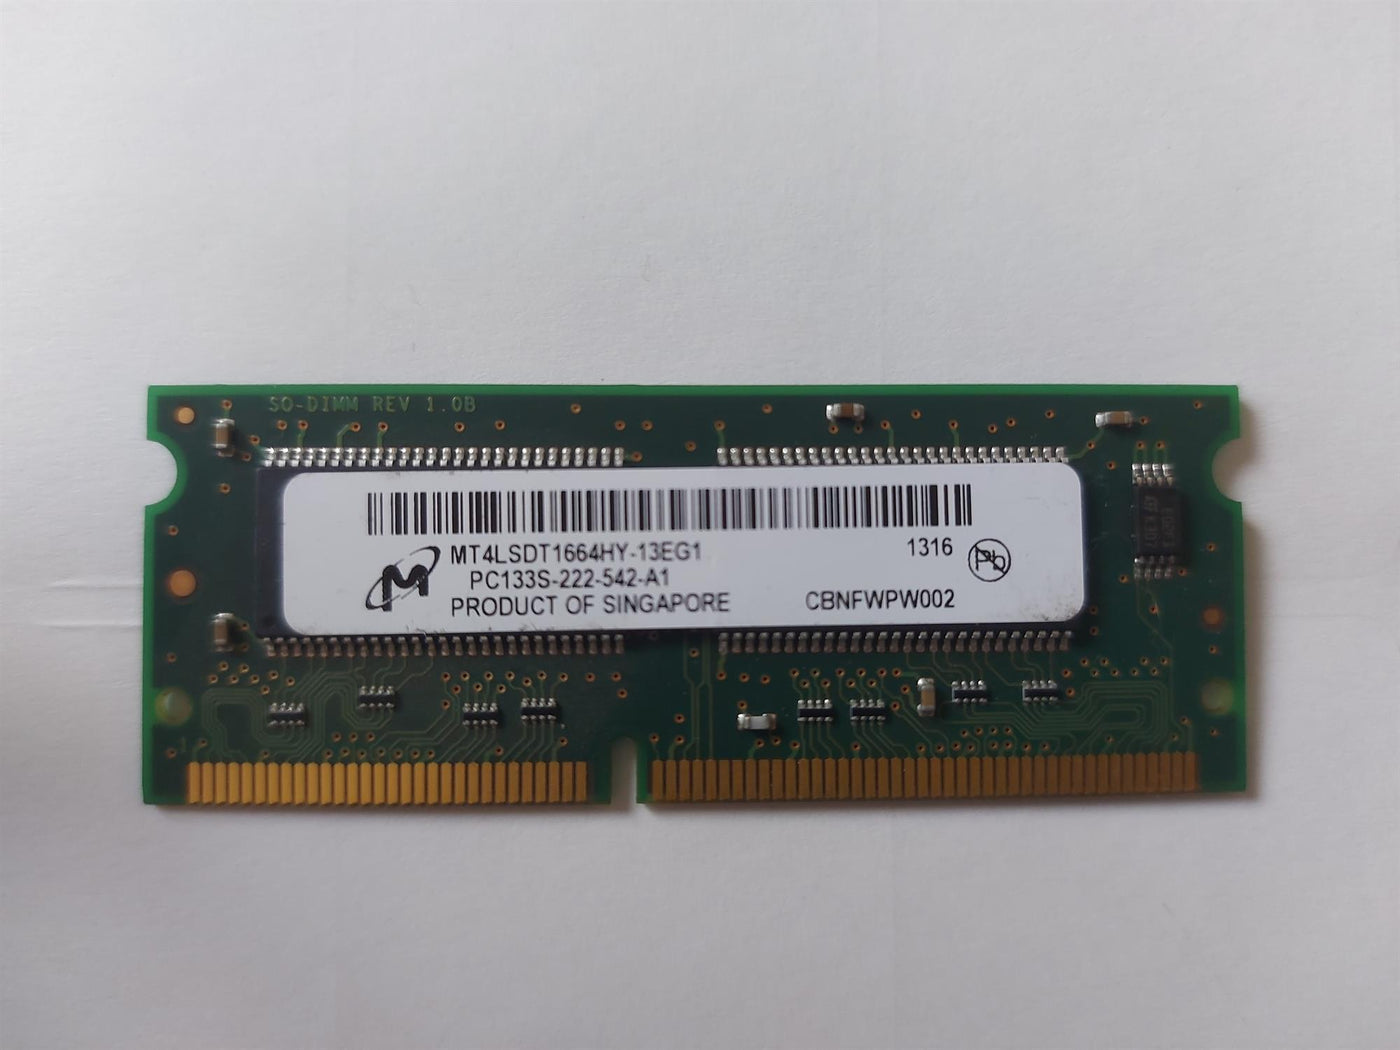 Micron 128MB 133Mhz 144pin DDR SDRAM SODIMM (MT4LSDT1664HY-13EG1)